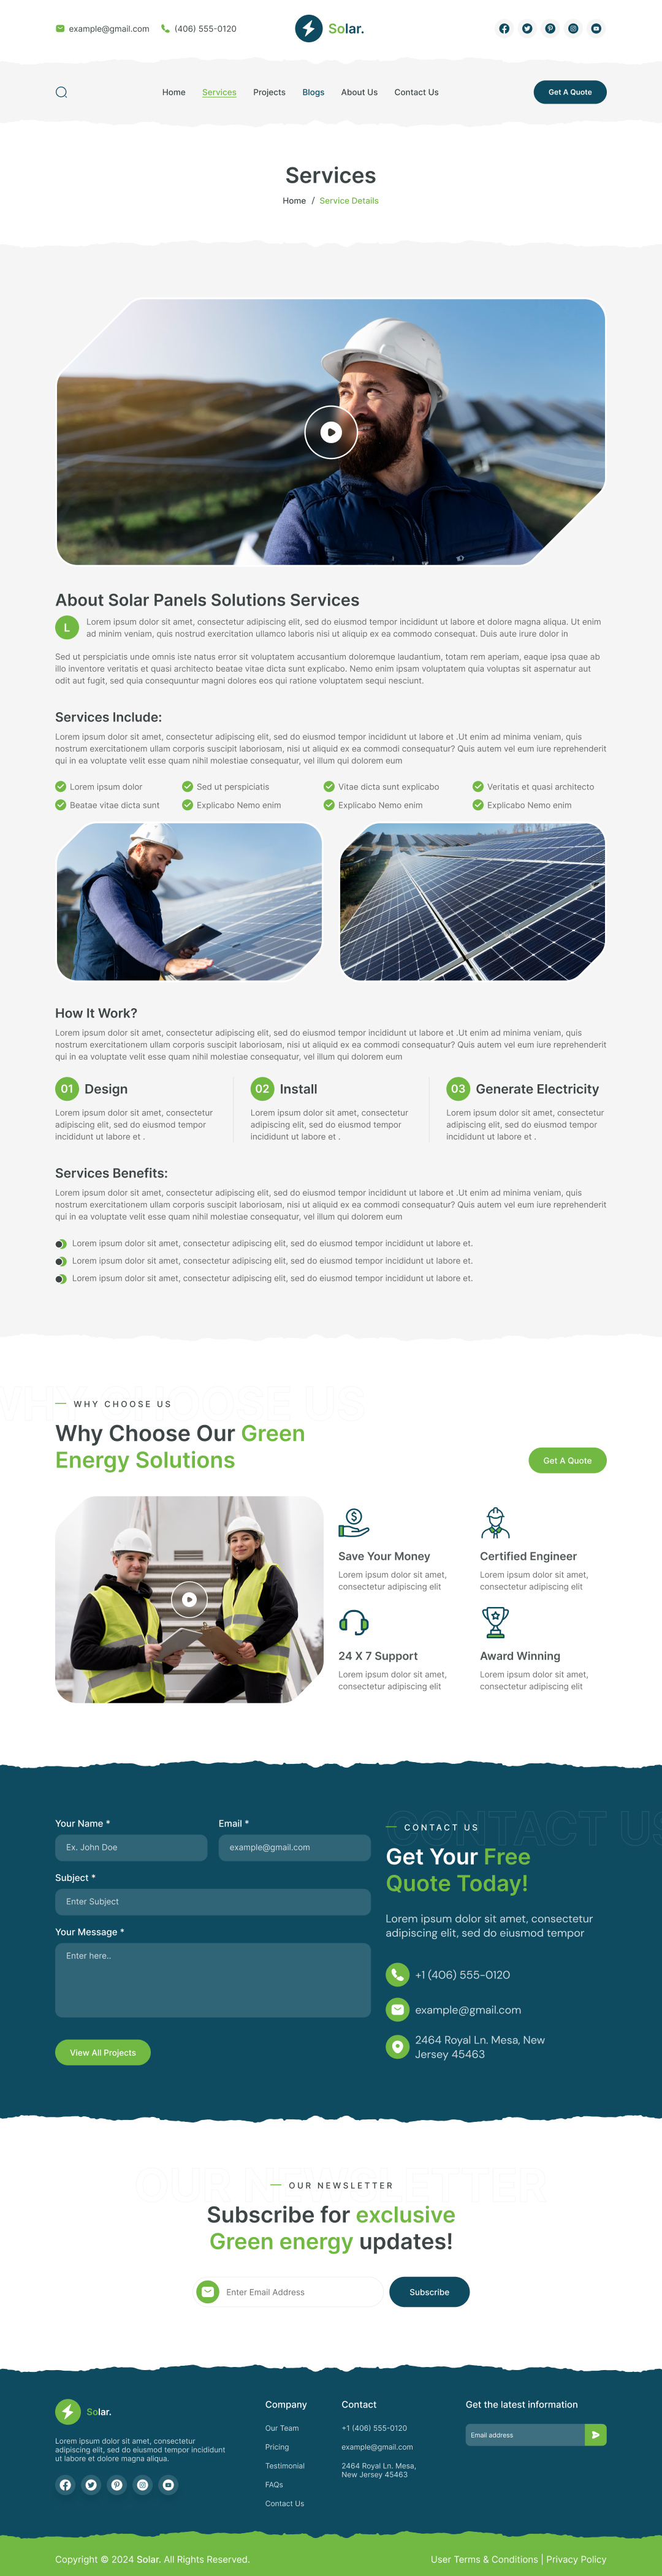 solar energy website service details page ui ux design figma 